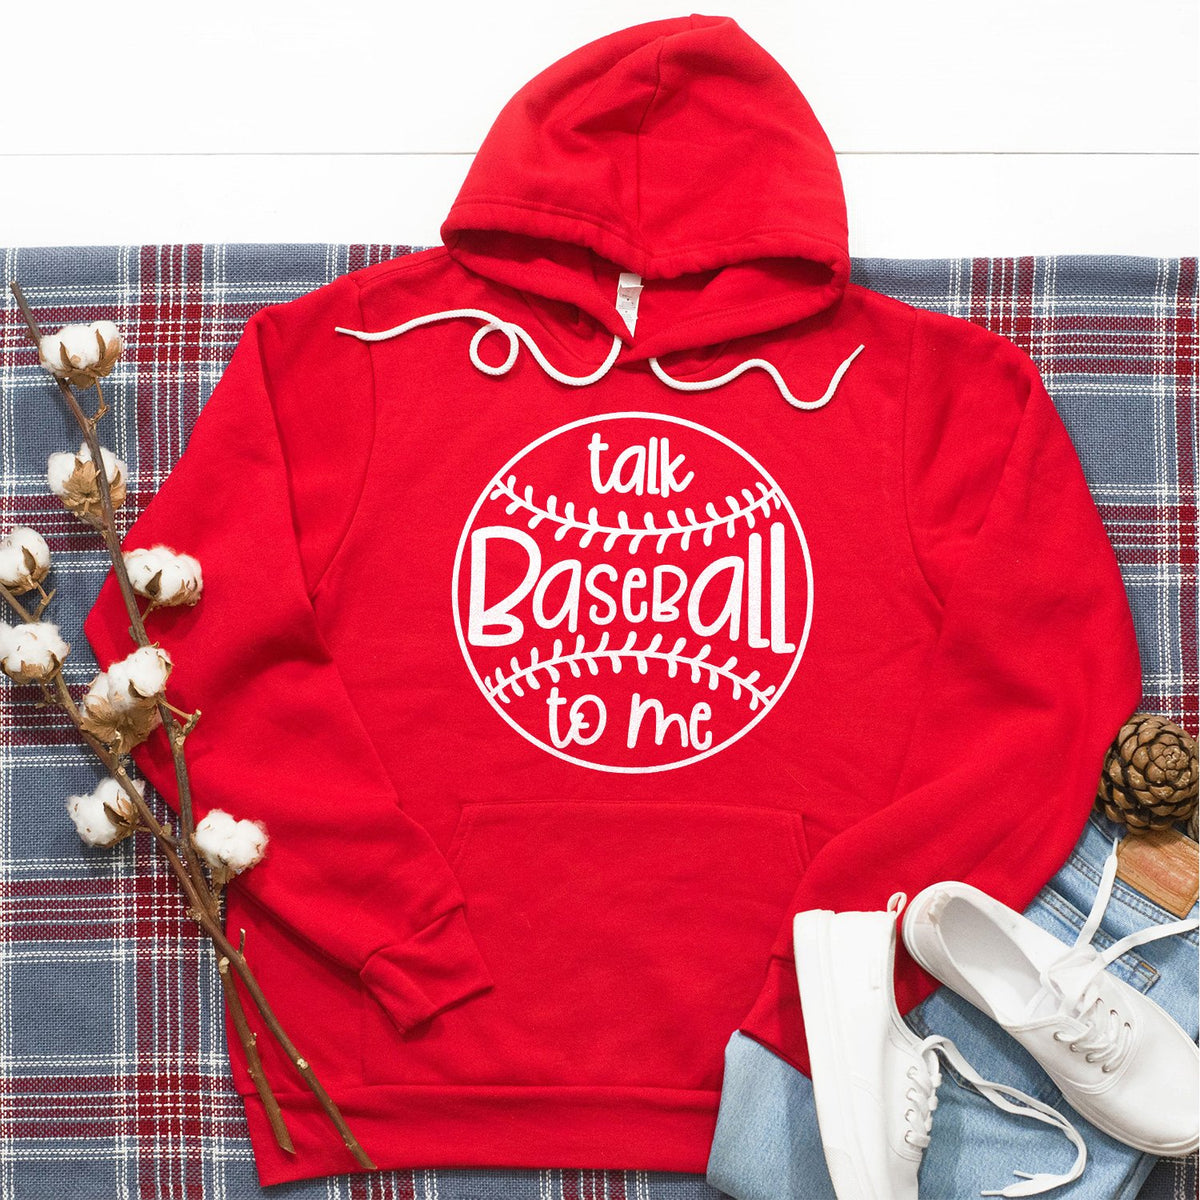 Talk Baseball To Me - Hoodie Sweatshirt